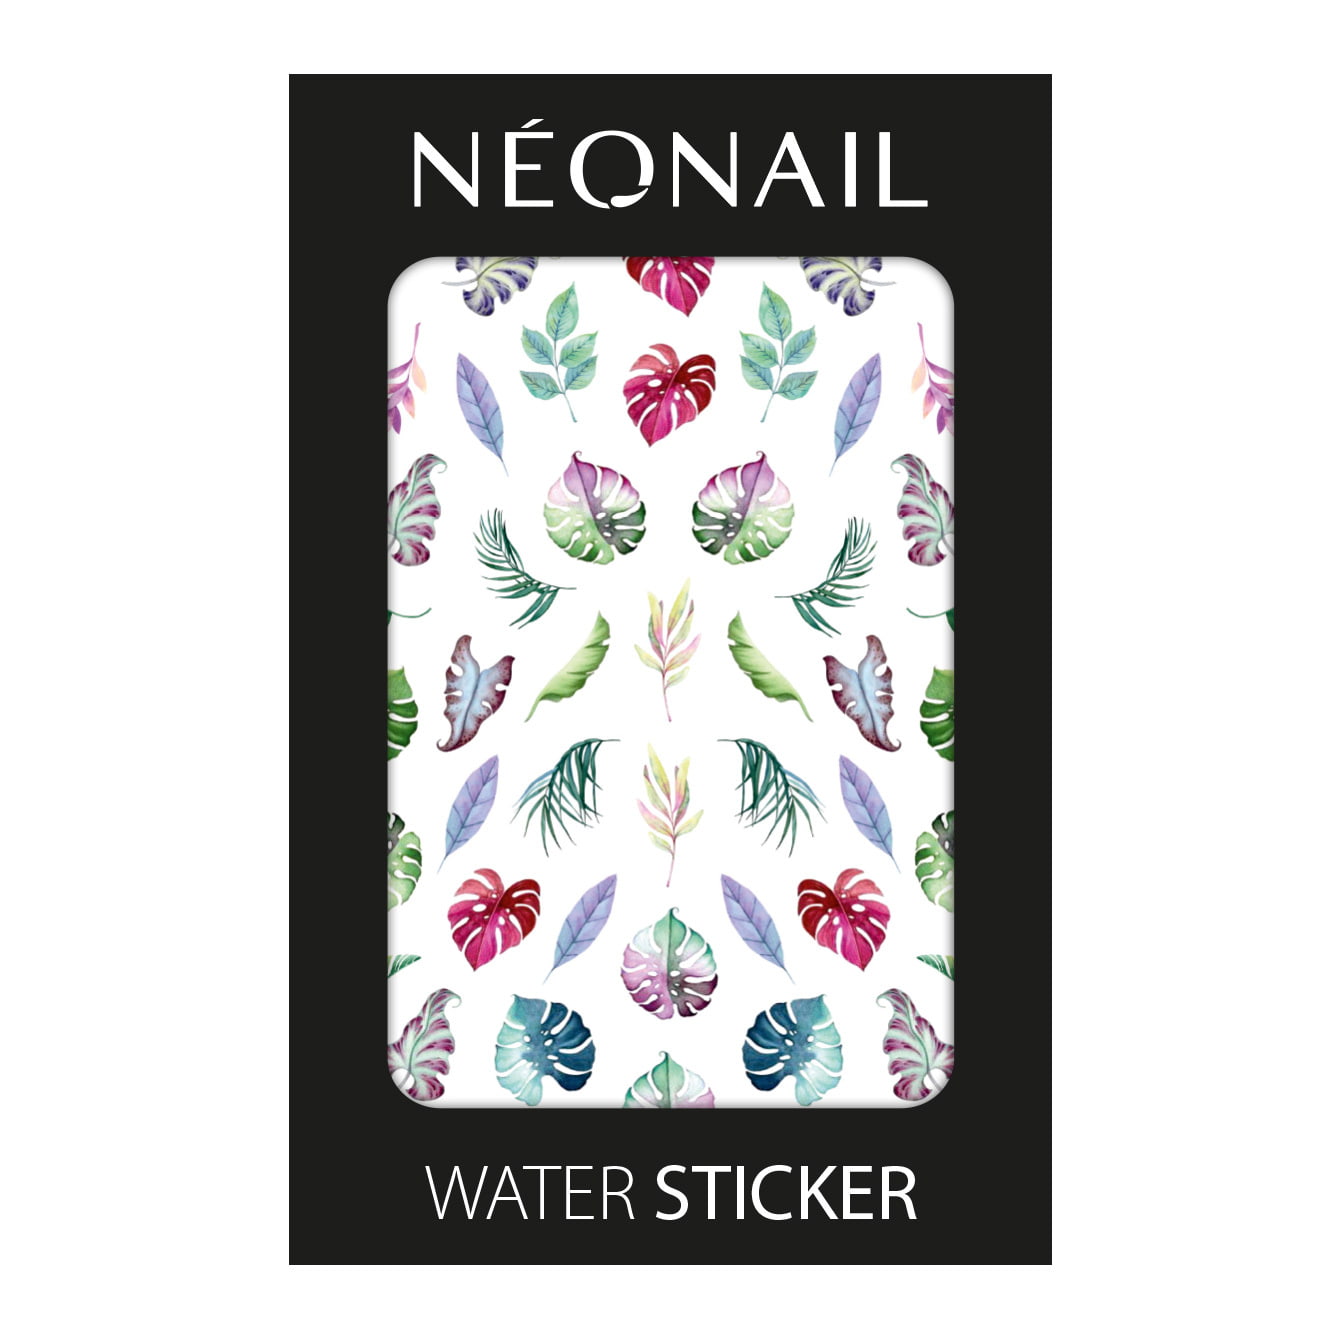 Naklejki wodne - water sticker - NN11